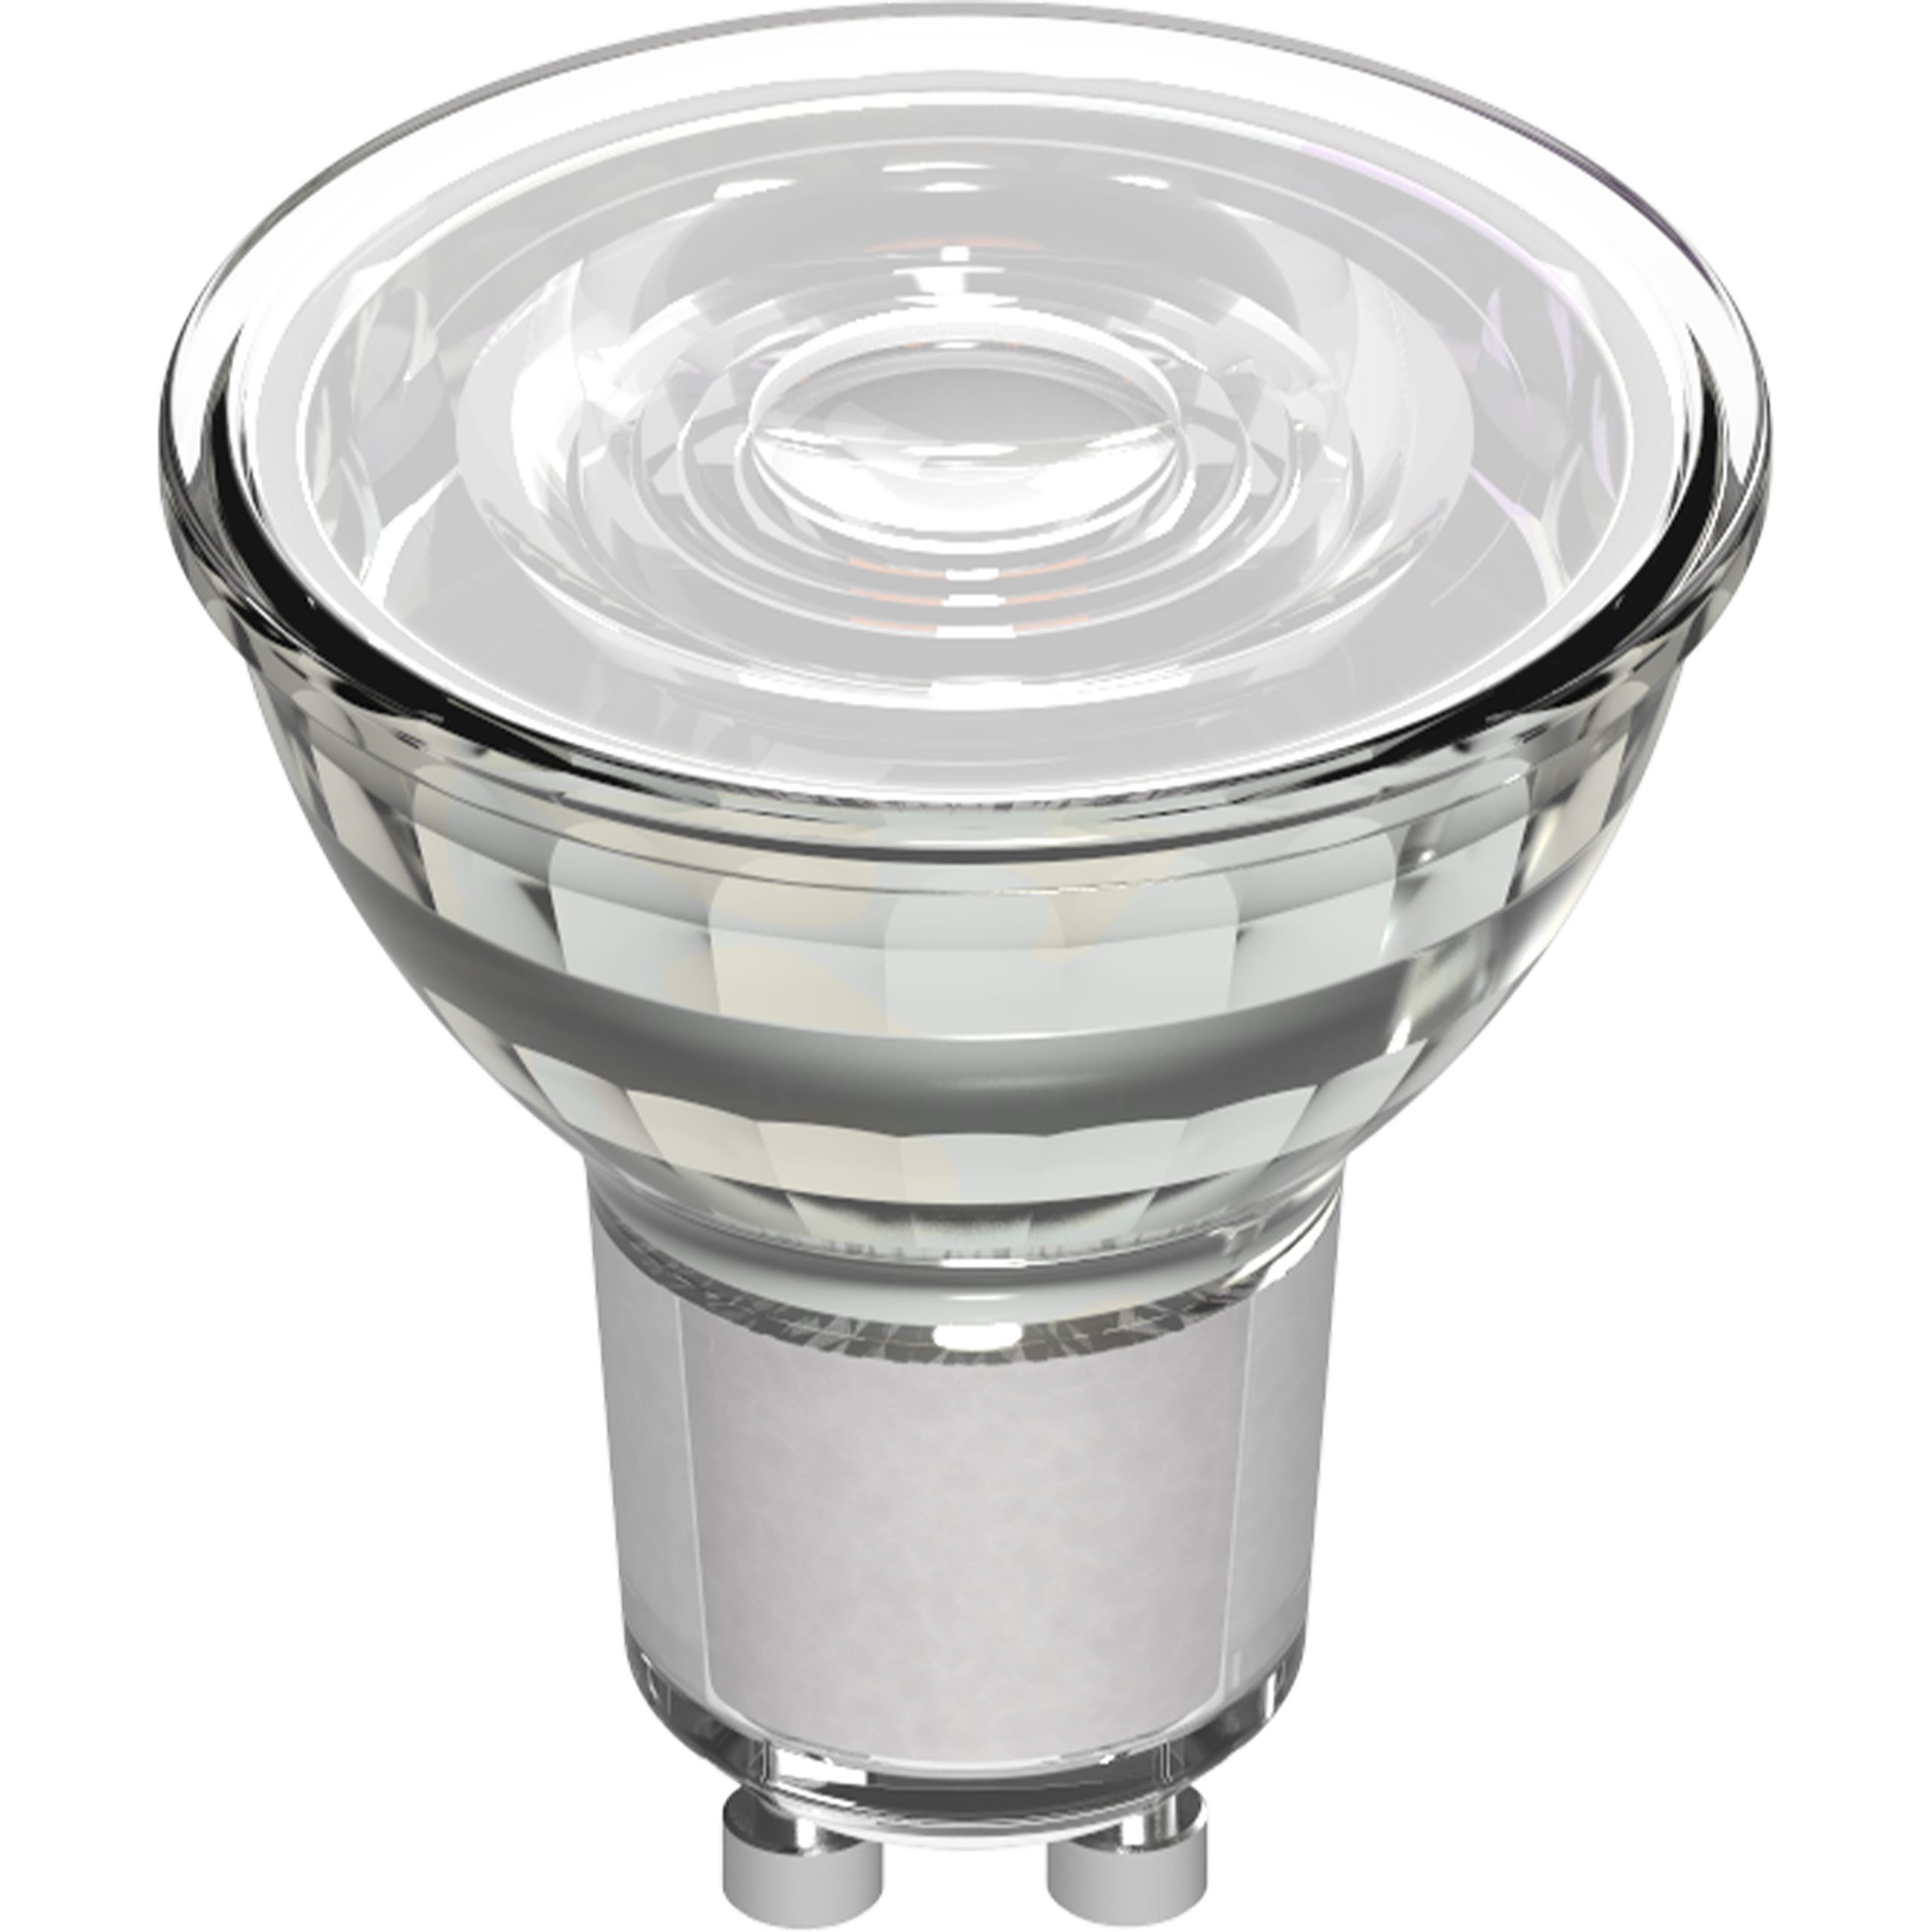 LED's light LED-Leuchtmittel 0620162 LED Kerze, GU10, E14 2,9W warmweiß Opal C35 - 50.000h Haltbarkeit